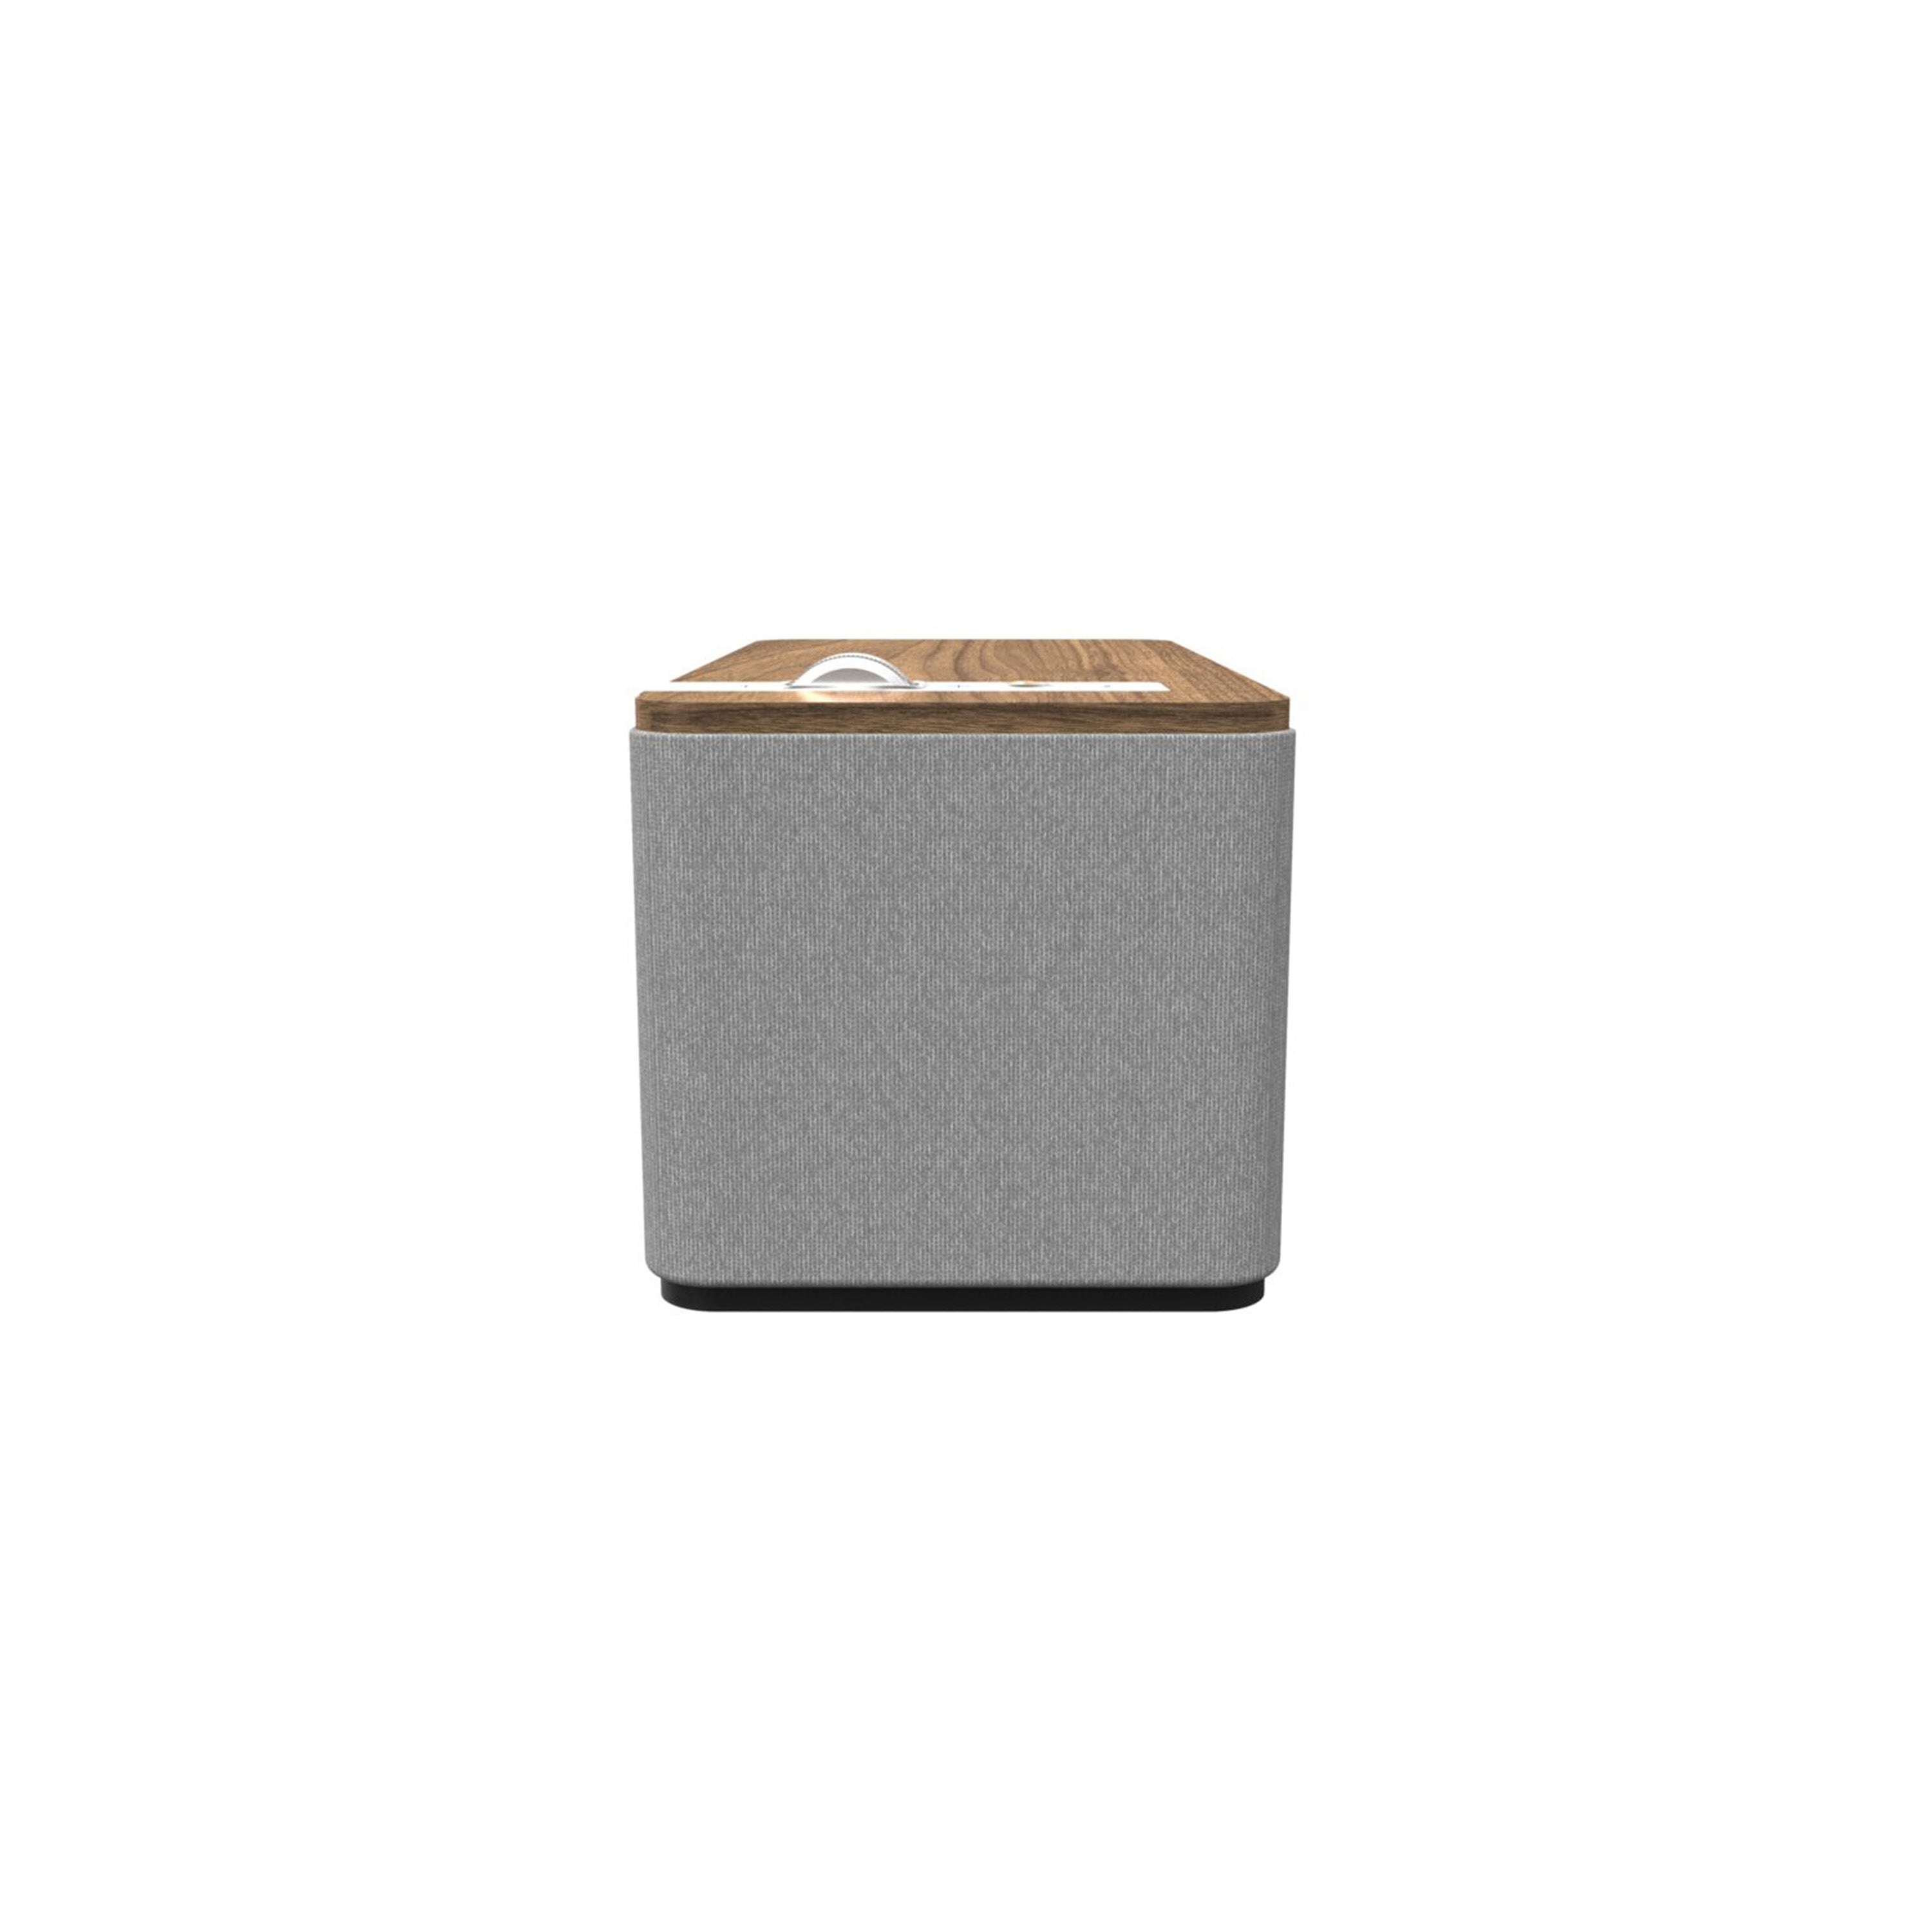 The One Plus | Compact Premium Bluetooth Speaker System